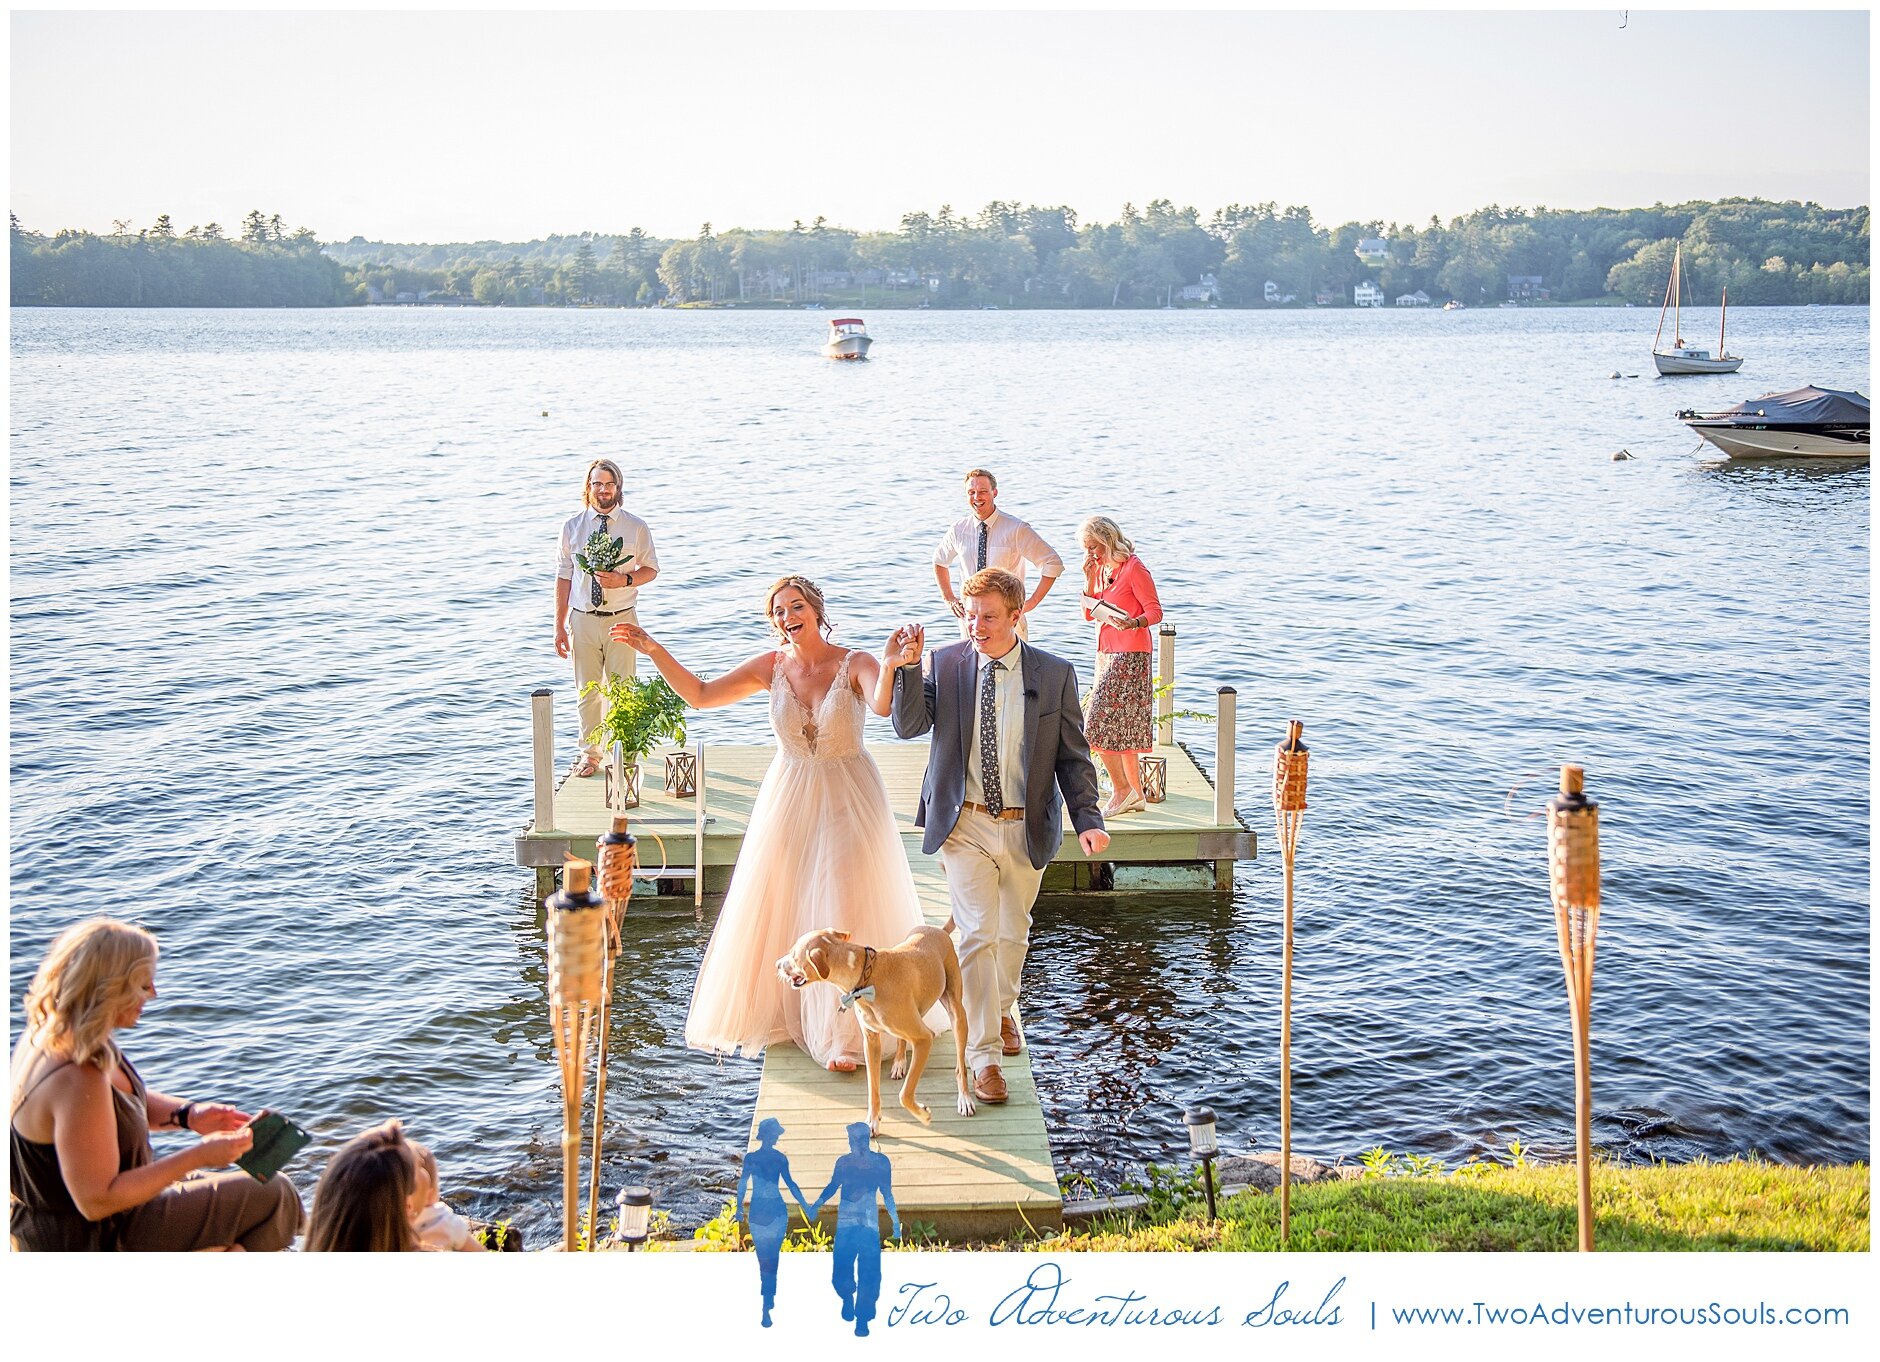 Lake Cobbosseeconte Wedding, Manchester Maine, Maine Lake Wedding Photographer, Two Adventurous Souls - 080820_0025.jpg